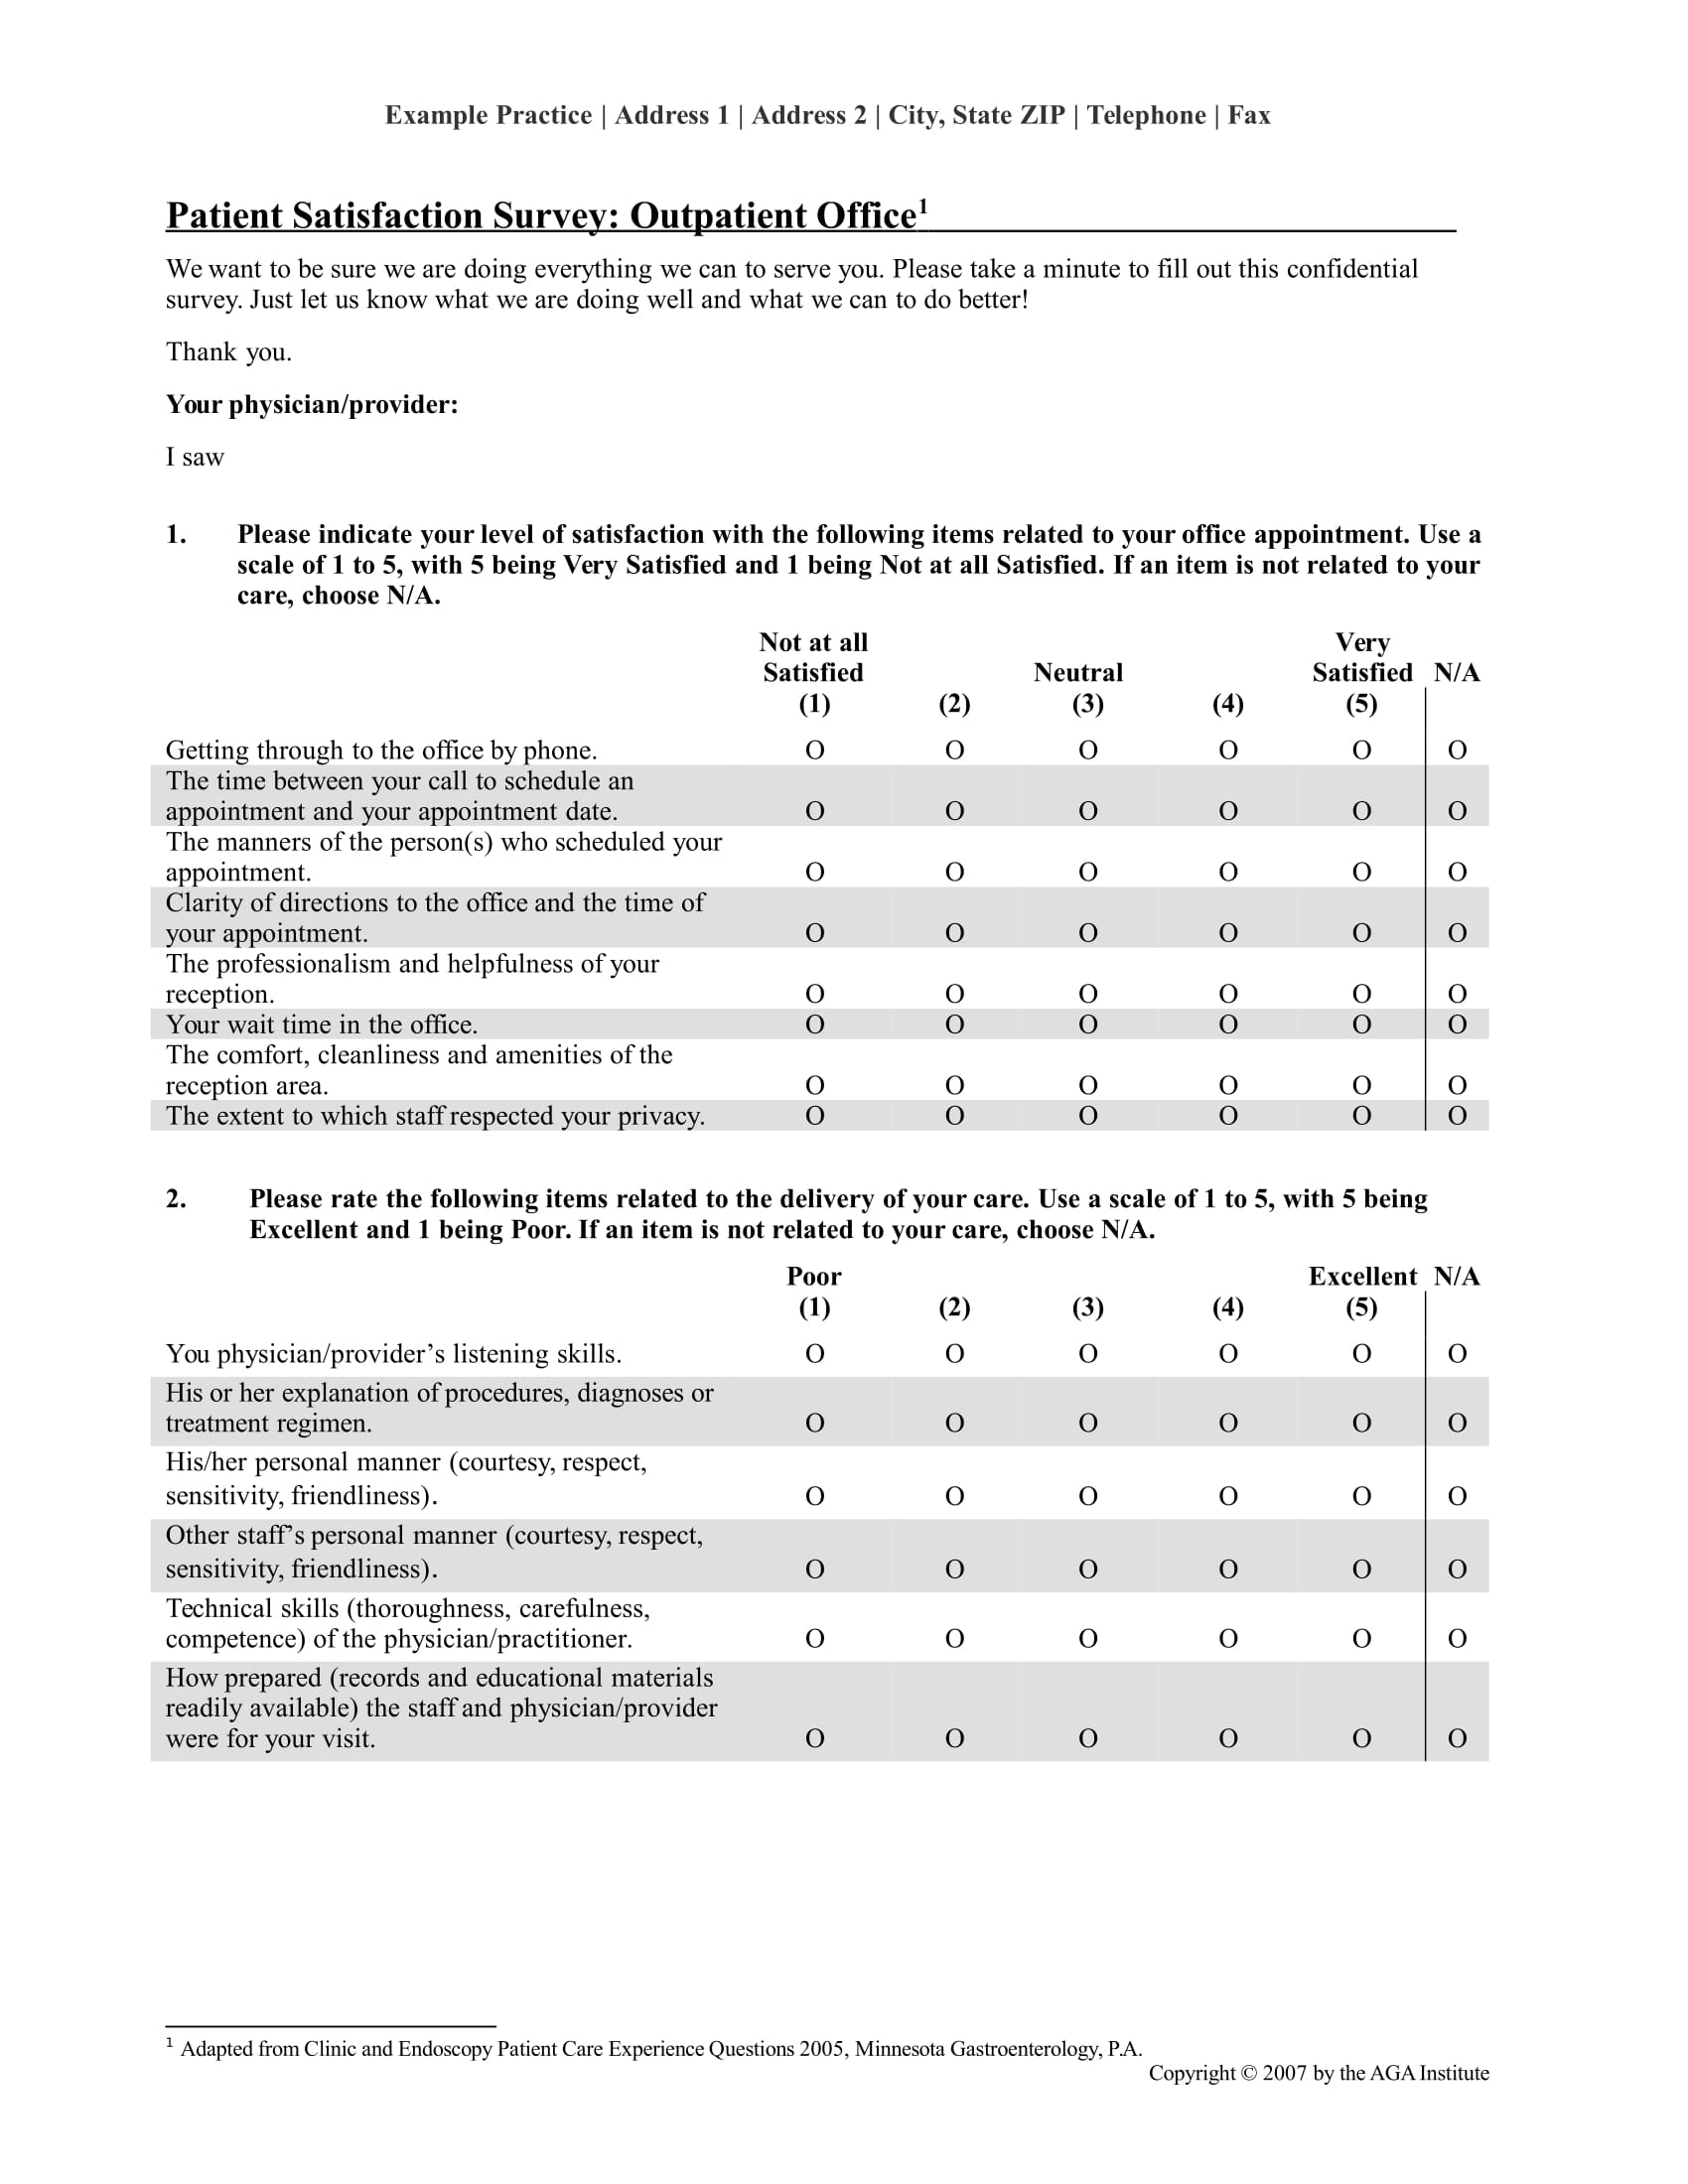 Patient Satisfaction Survey Example